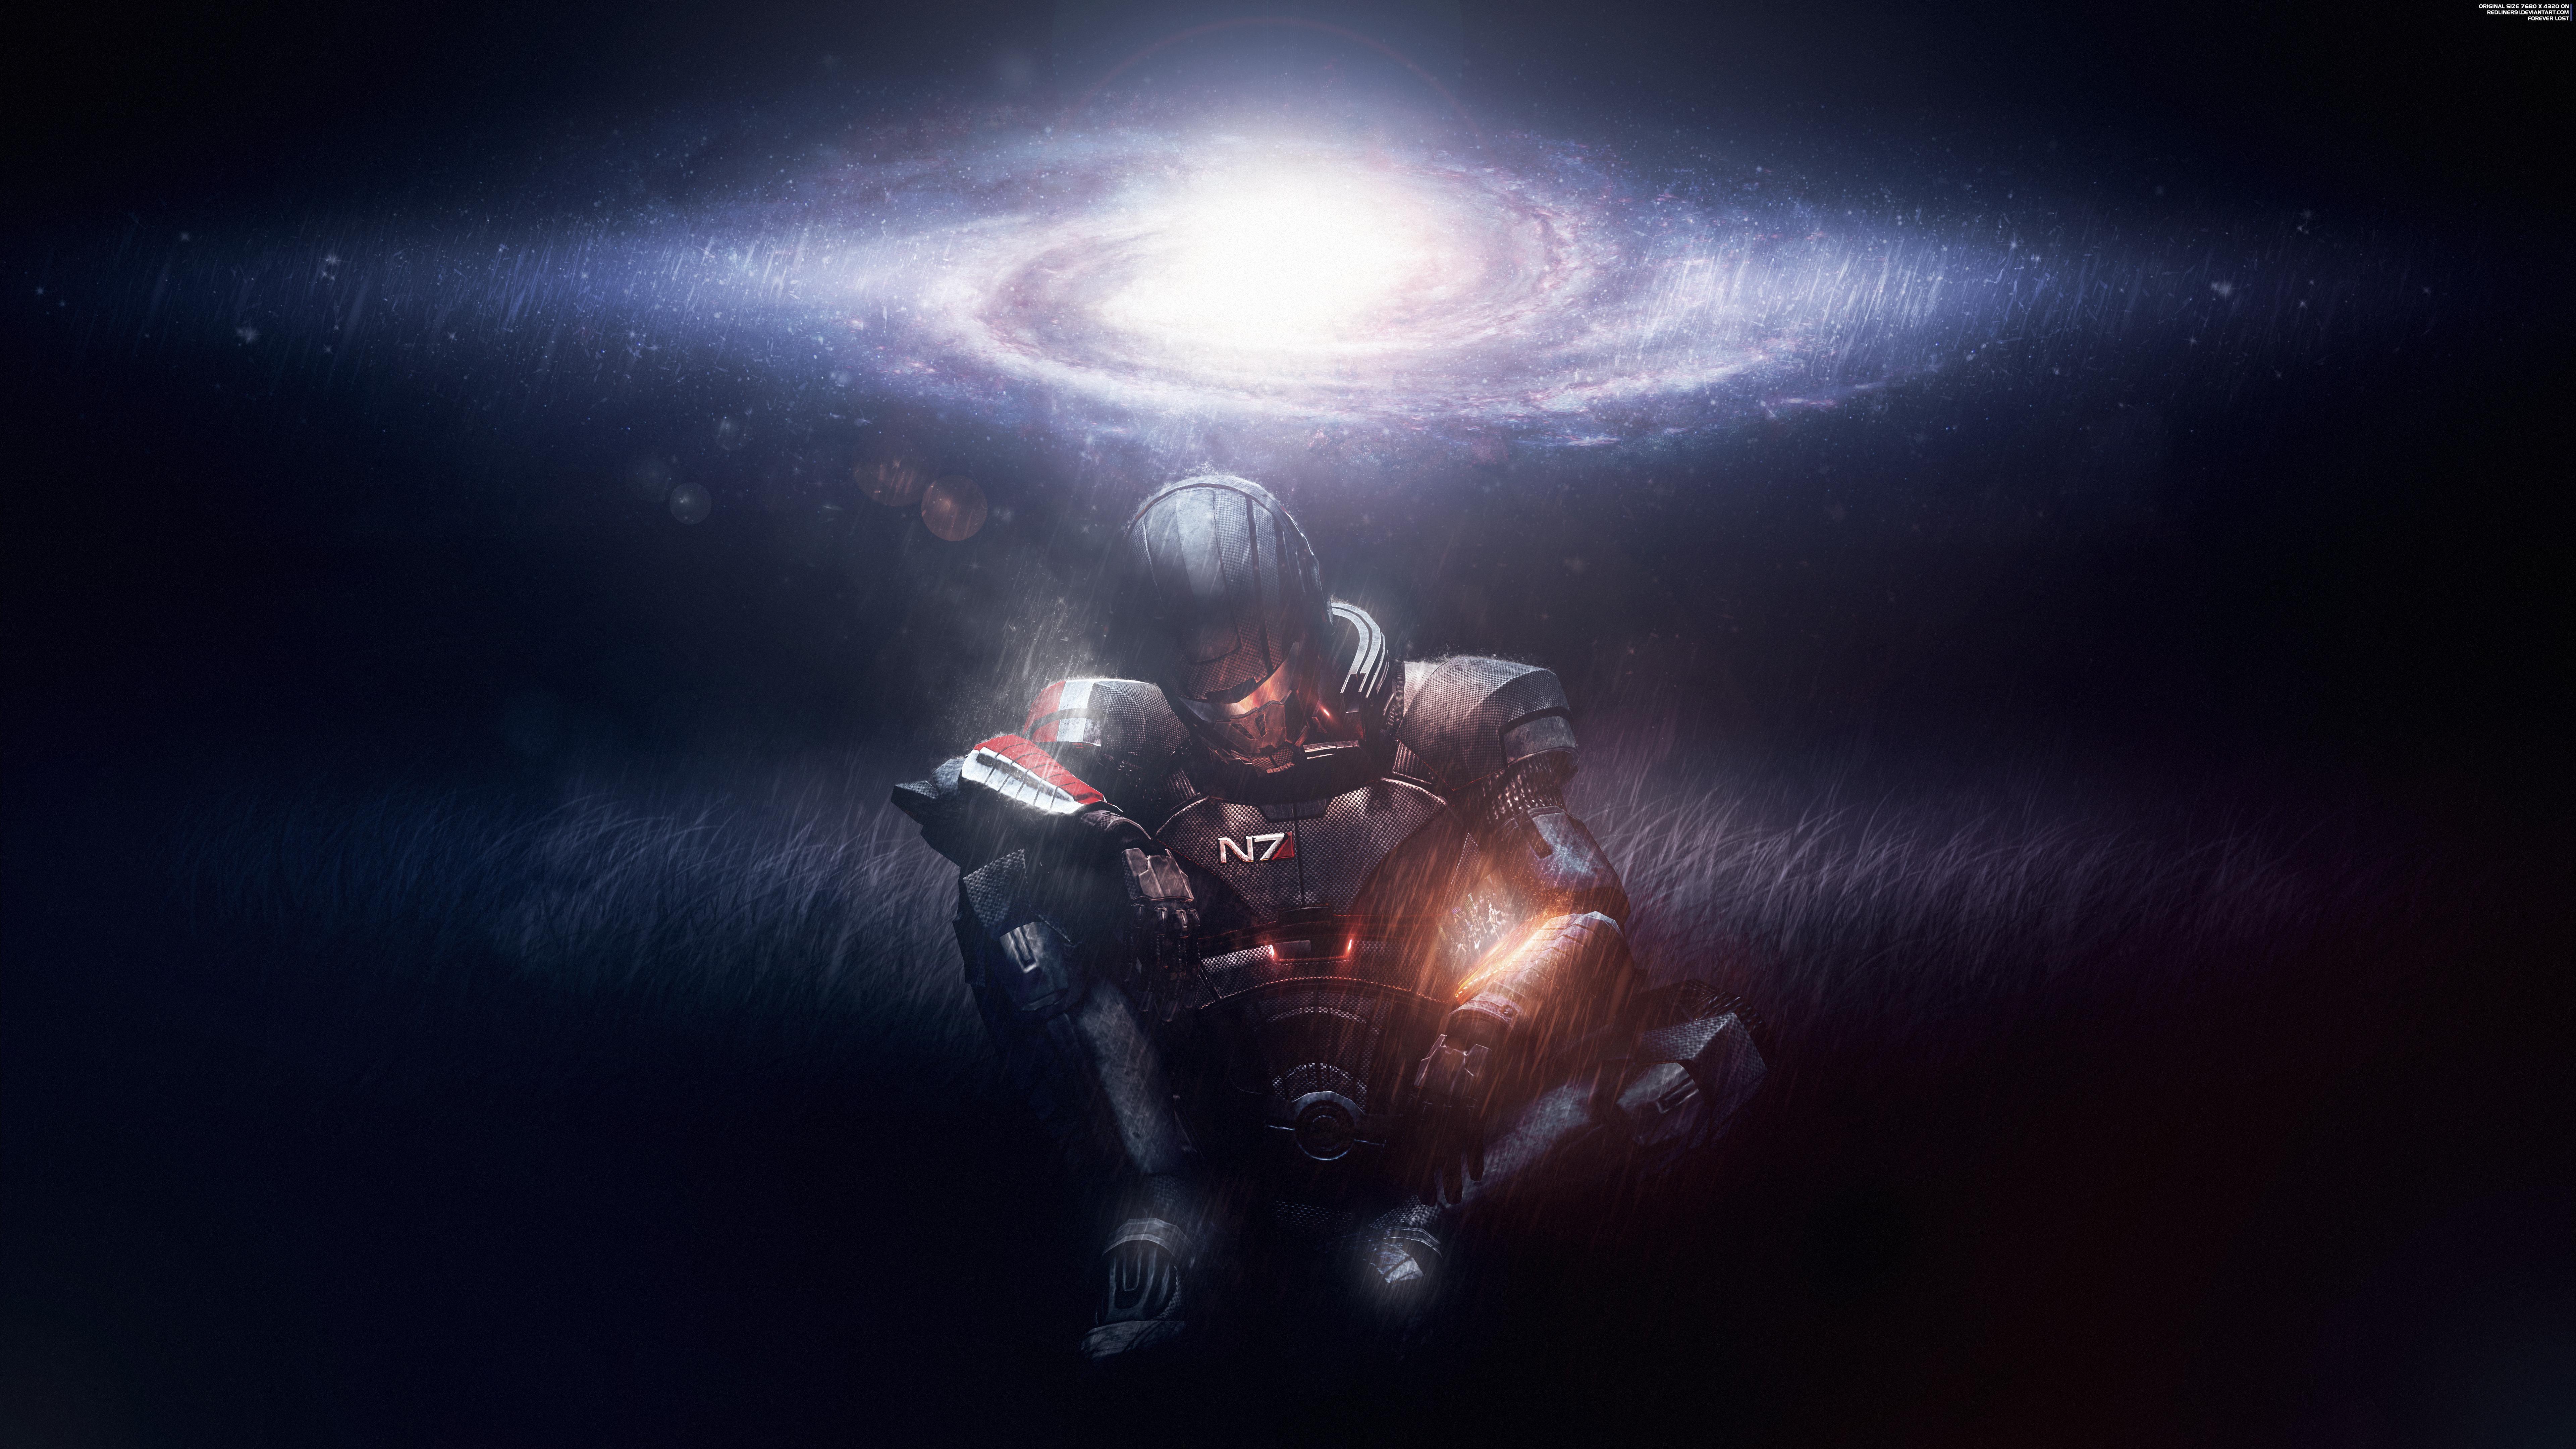 #Mass Effect, #Milky Way, #Spiral galaxy, K